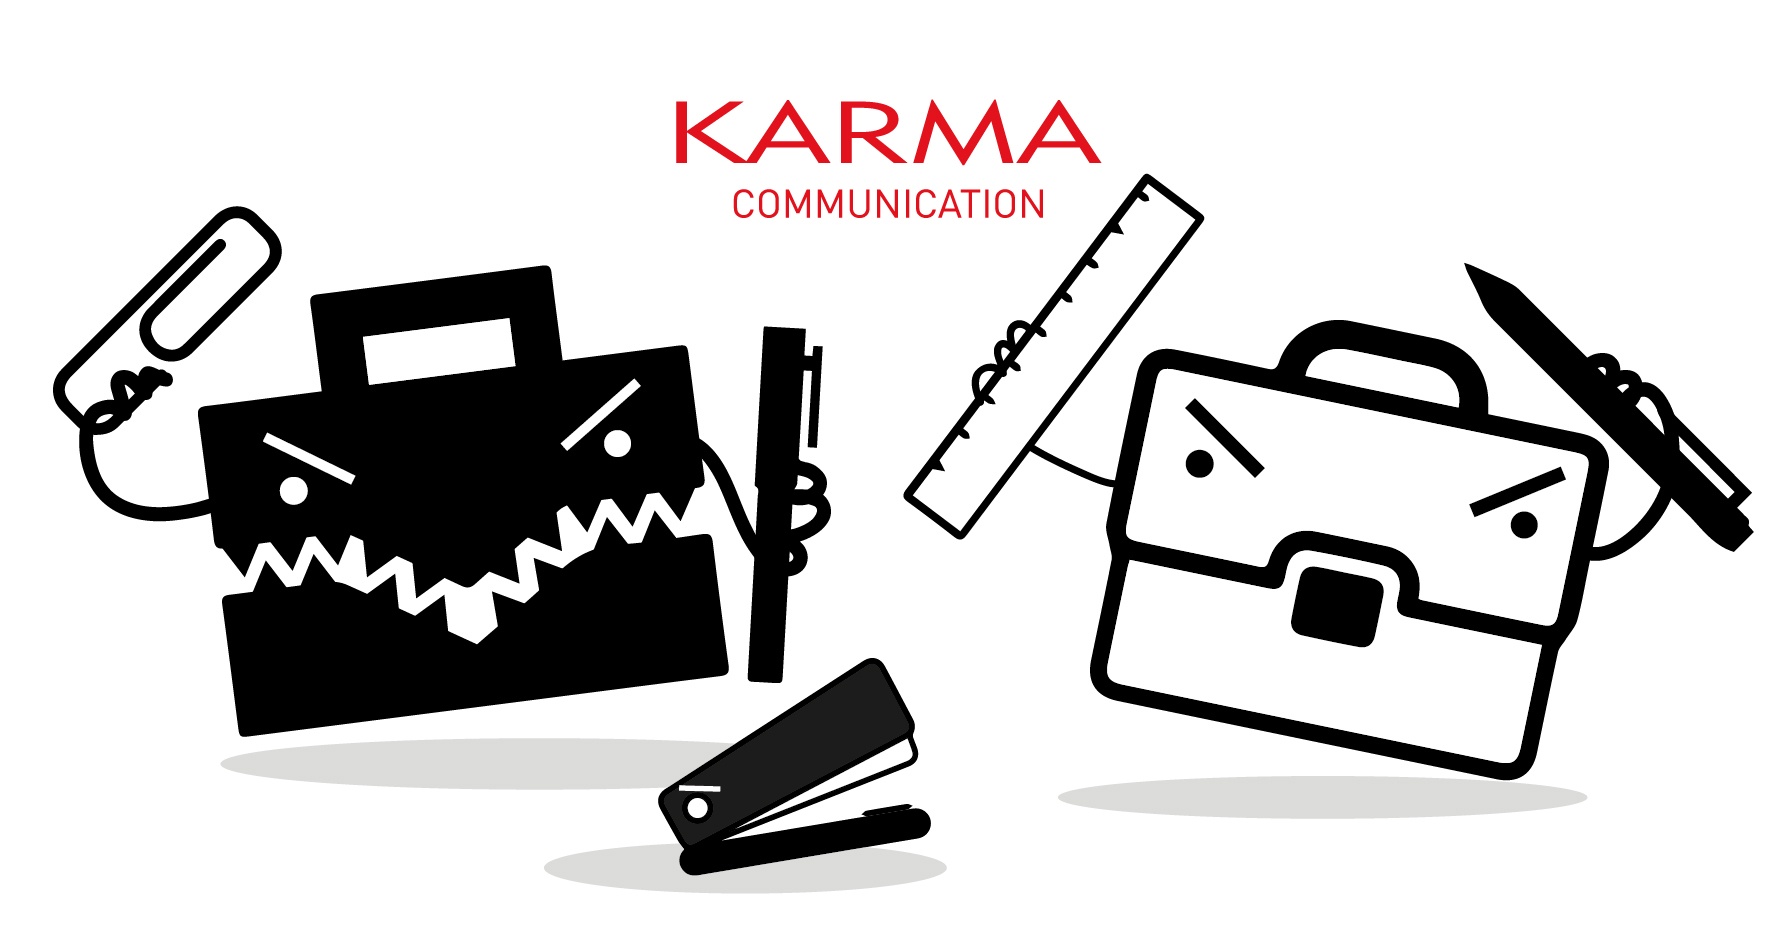 Karma Communication - La guerra della cartoleria